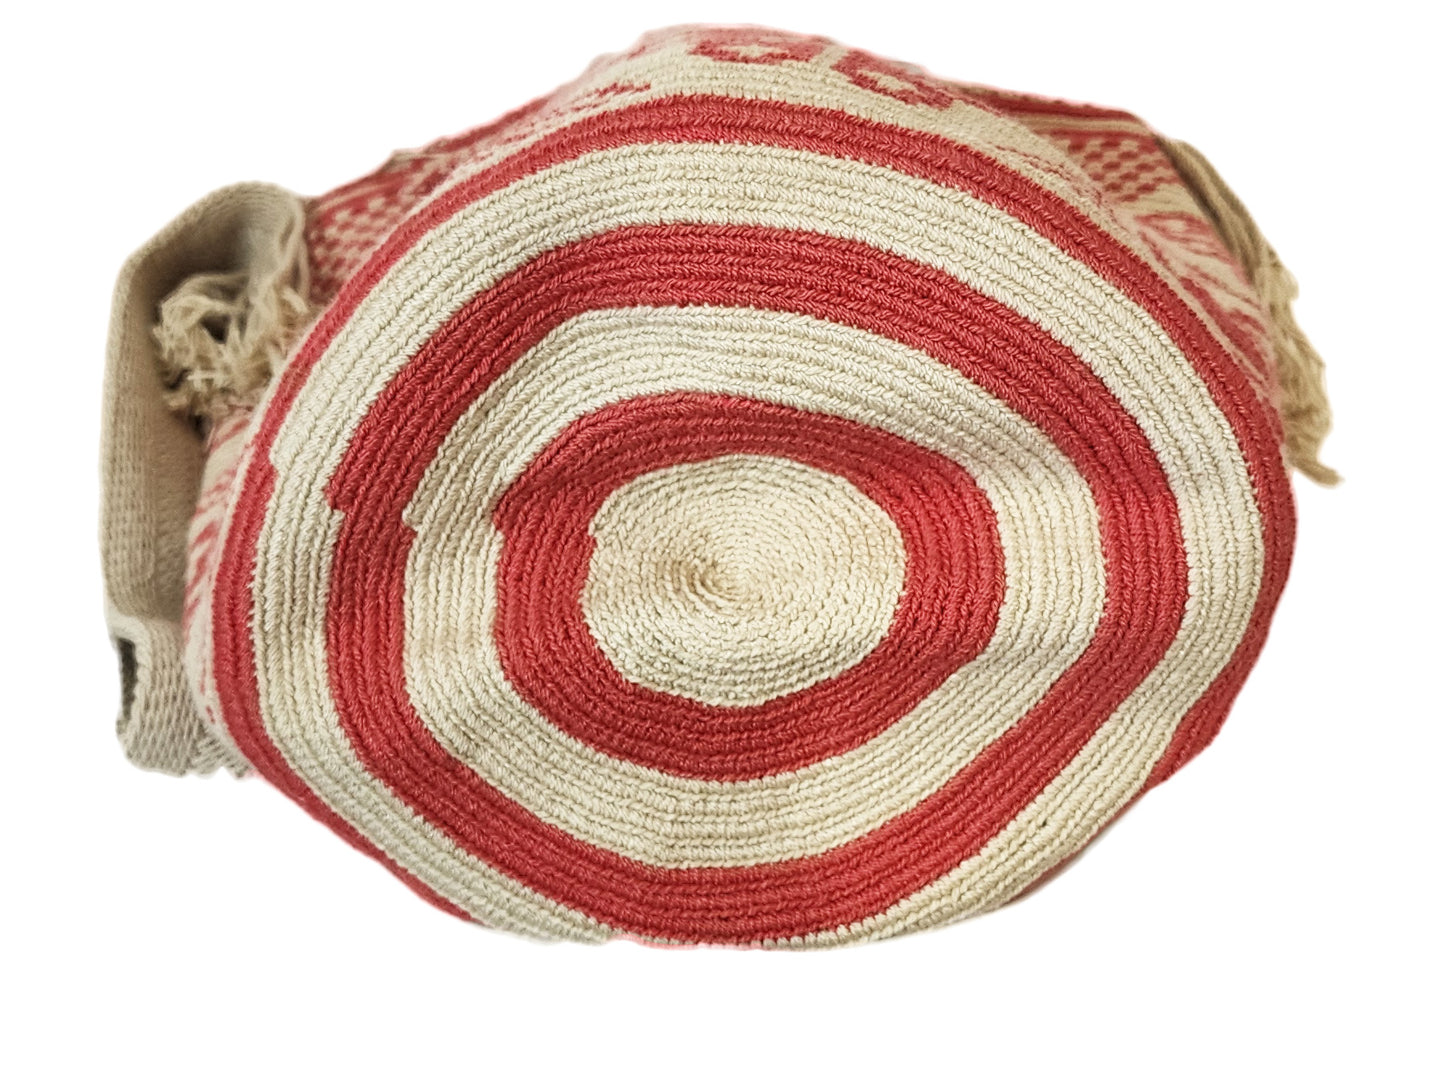 Sierra Large Handmade Crochet Wayuu Mochila Bag - Wuitusu